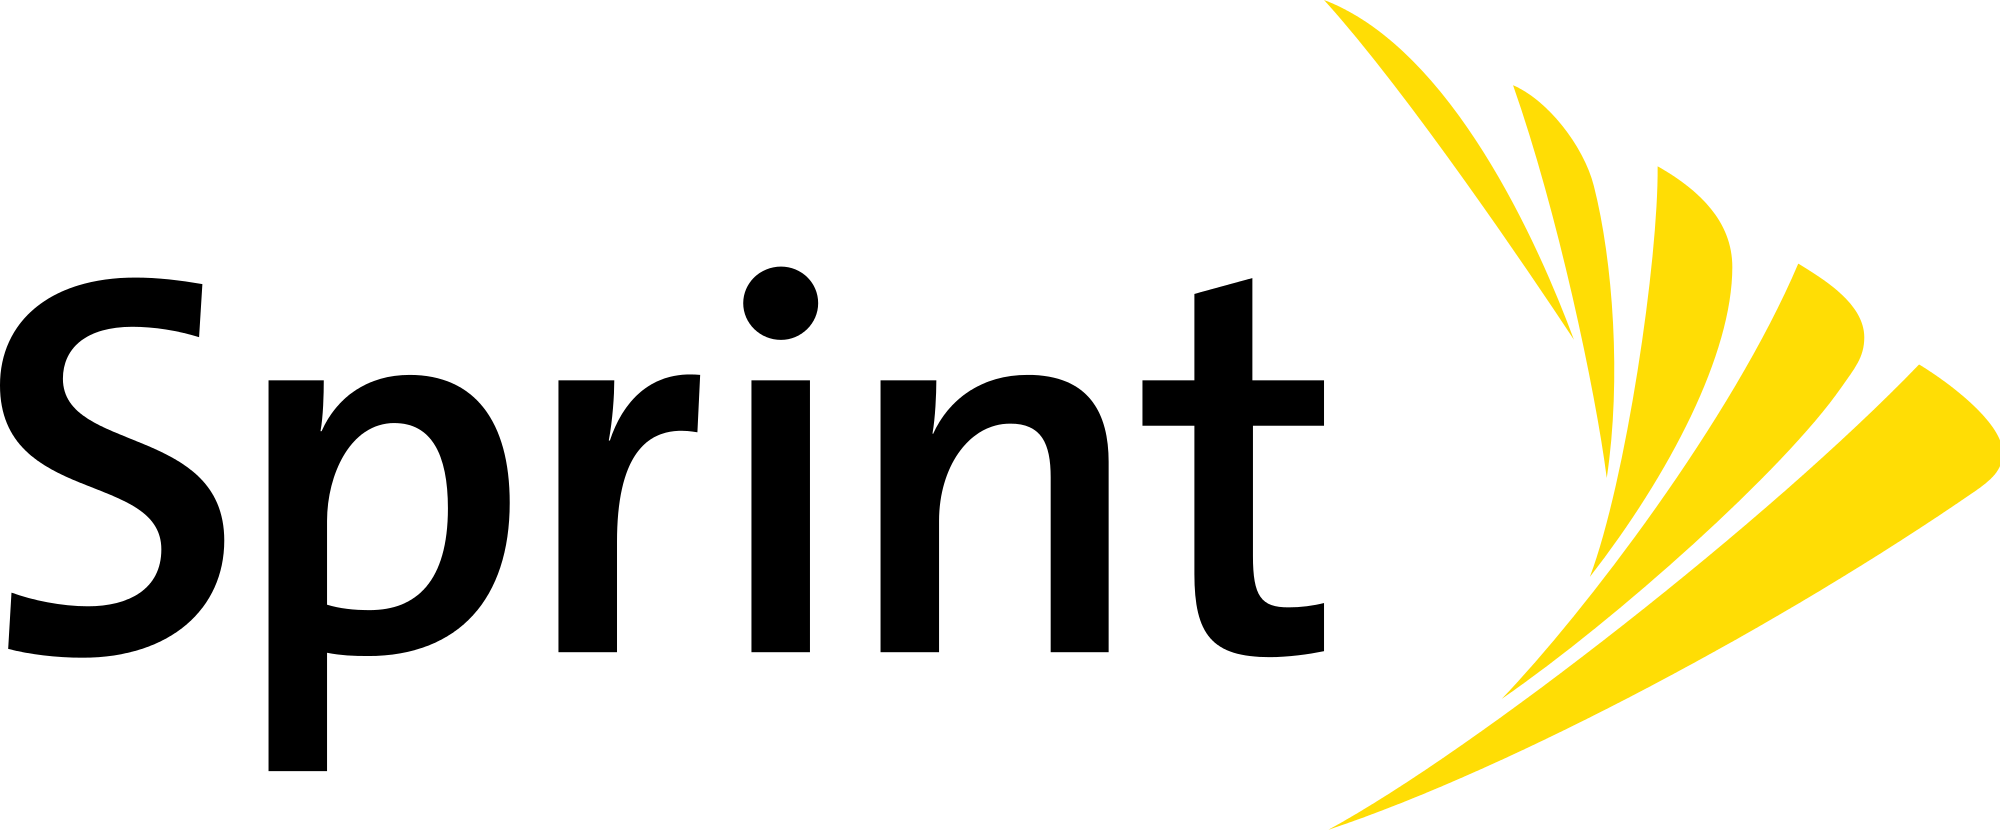 2000px-Logo_of_Sprint_Nextel.png